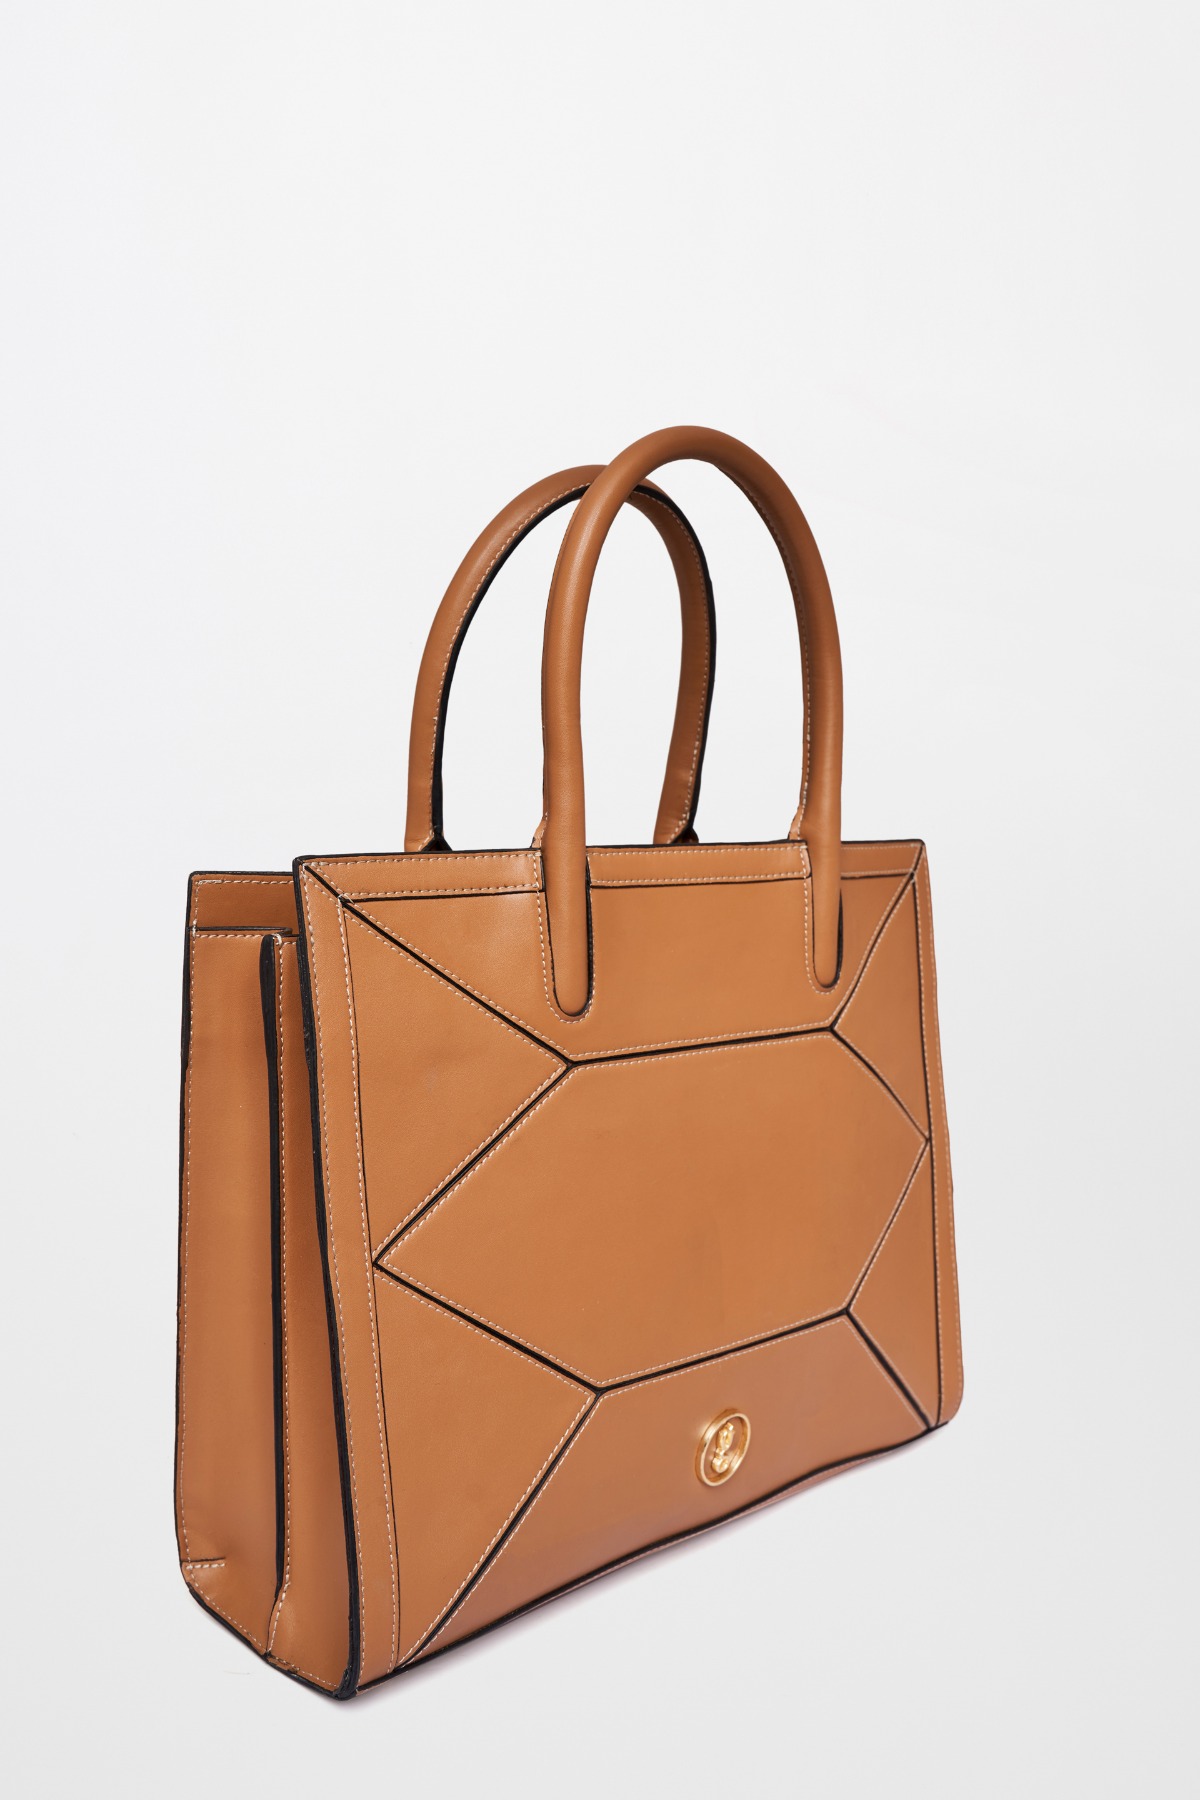 1 - Tan Handbag, image 1